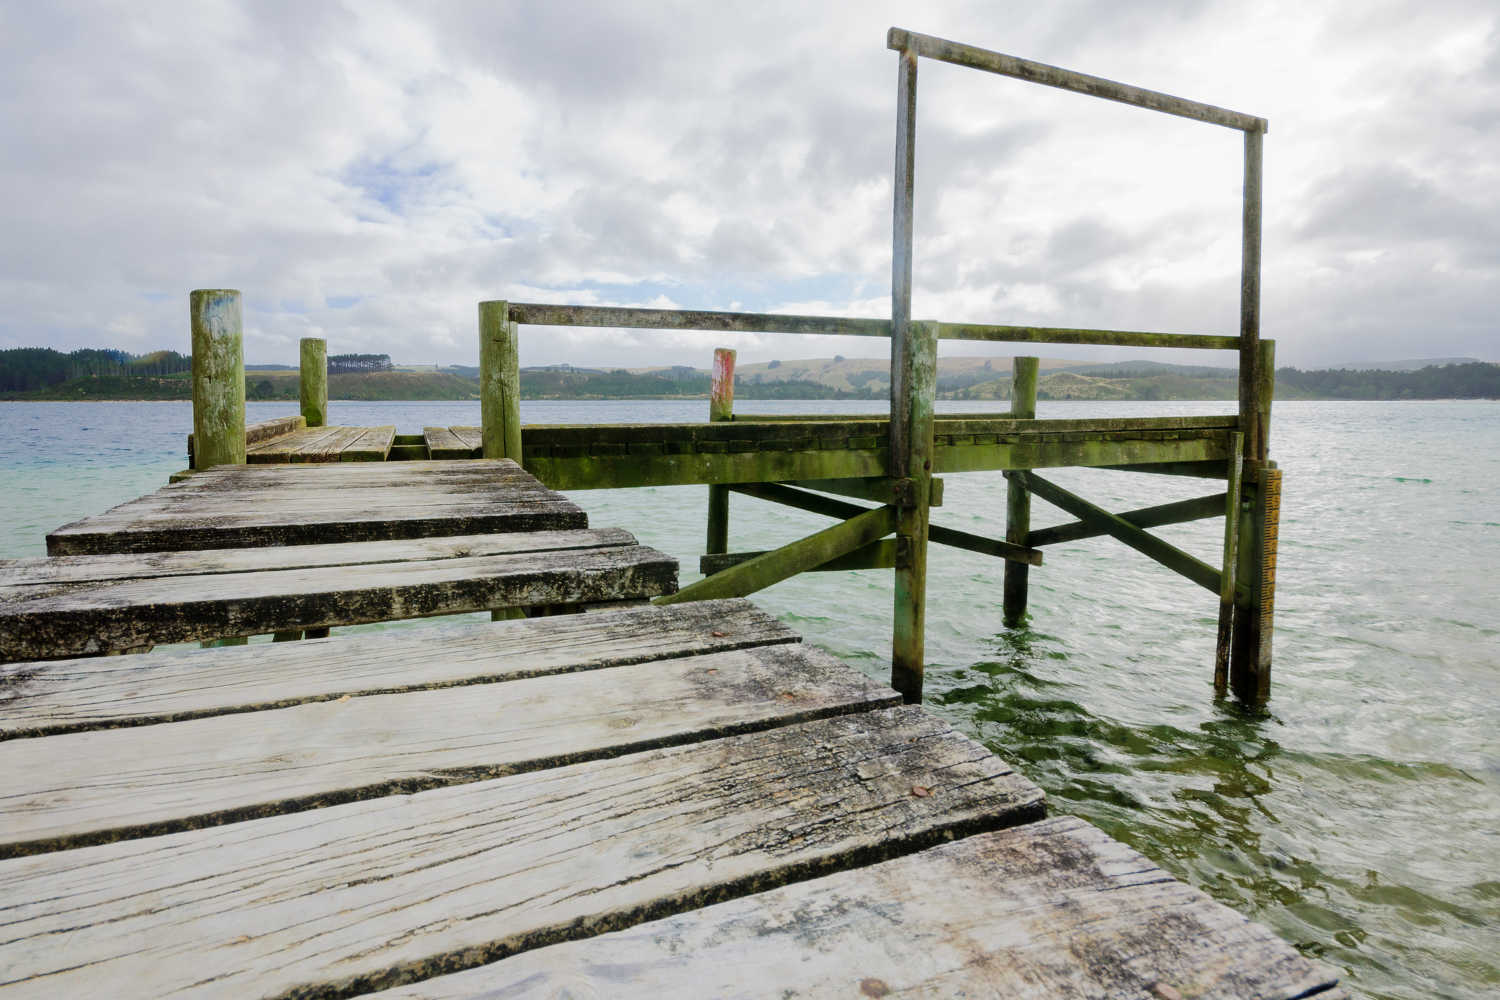 Pier in Kai Iwi lakes, Northland, New Zealand